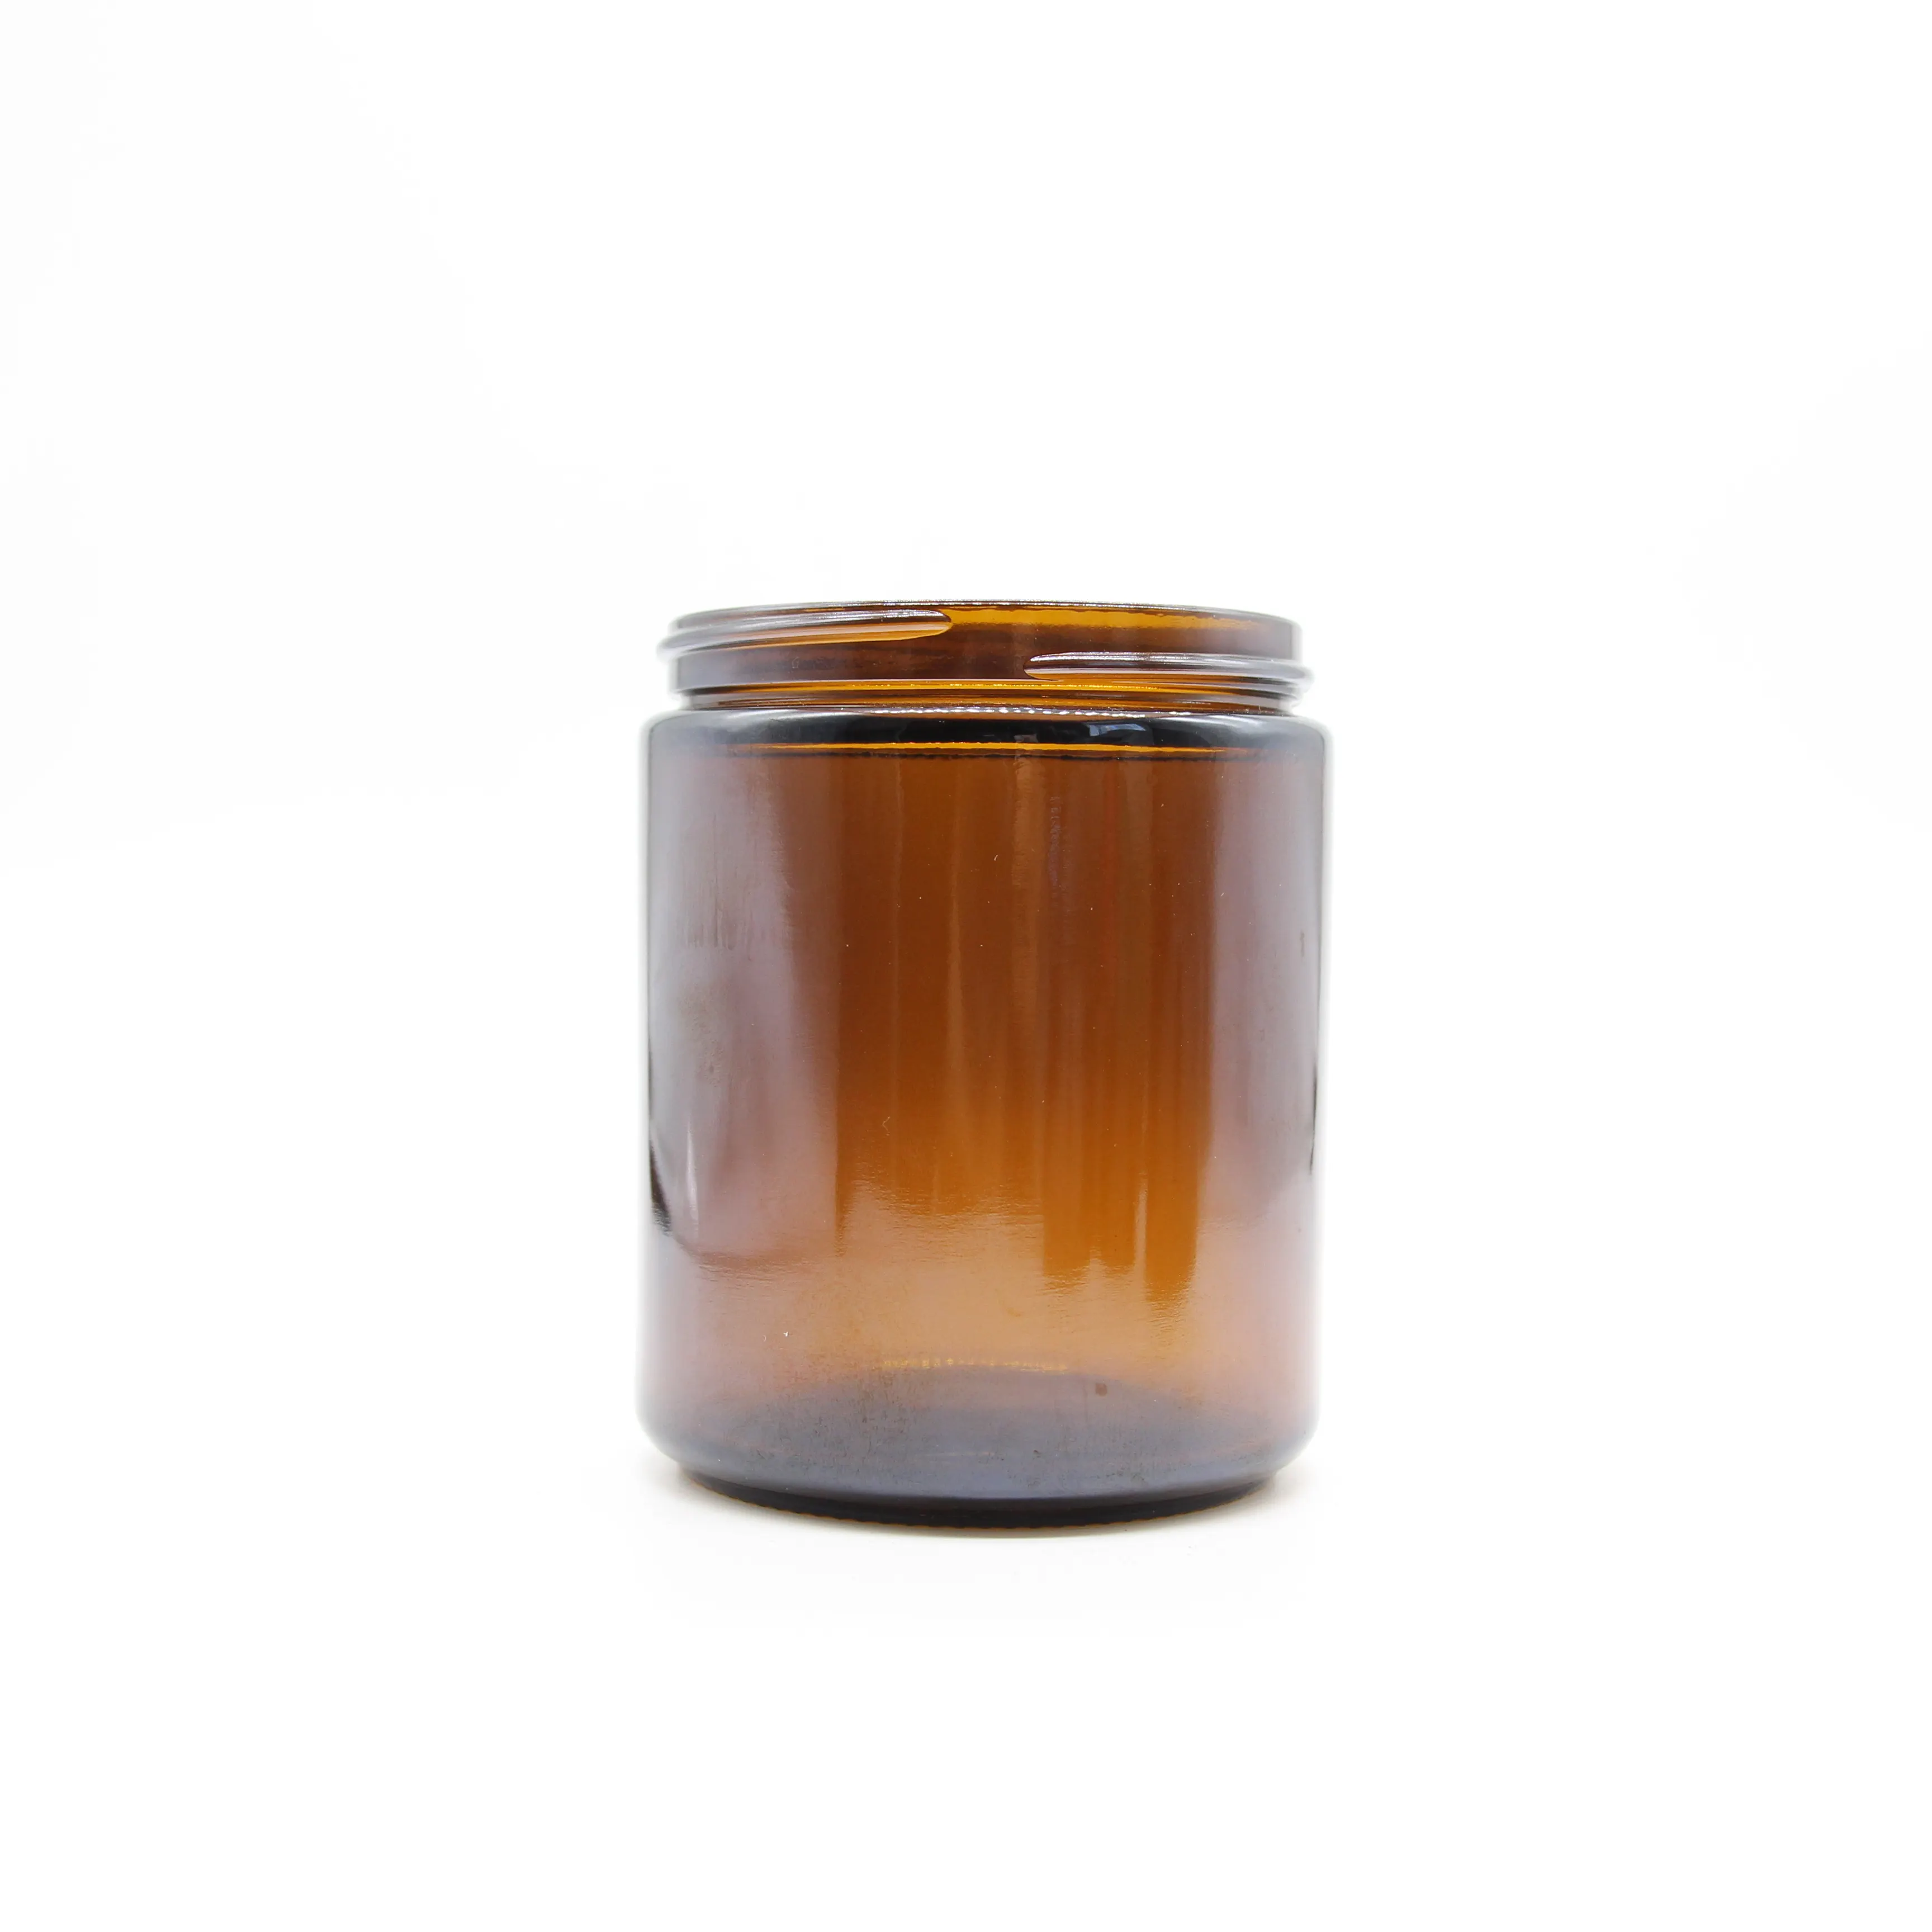 Lilin krim wajah tabung kaca kosmetik Amber bulat sisi lurus Pte dengan mulut lebar dan tutup bambu 50ml 2oz 9oz 270ml